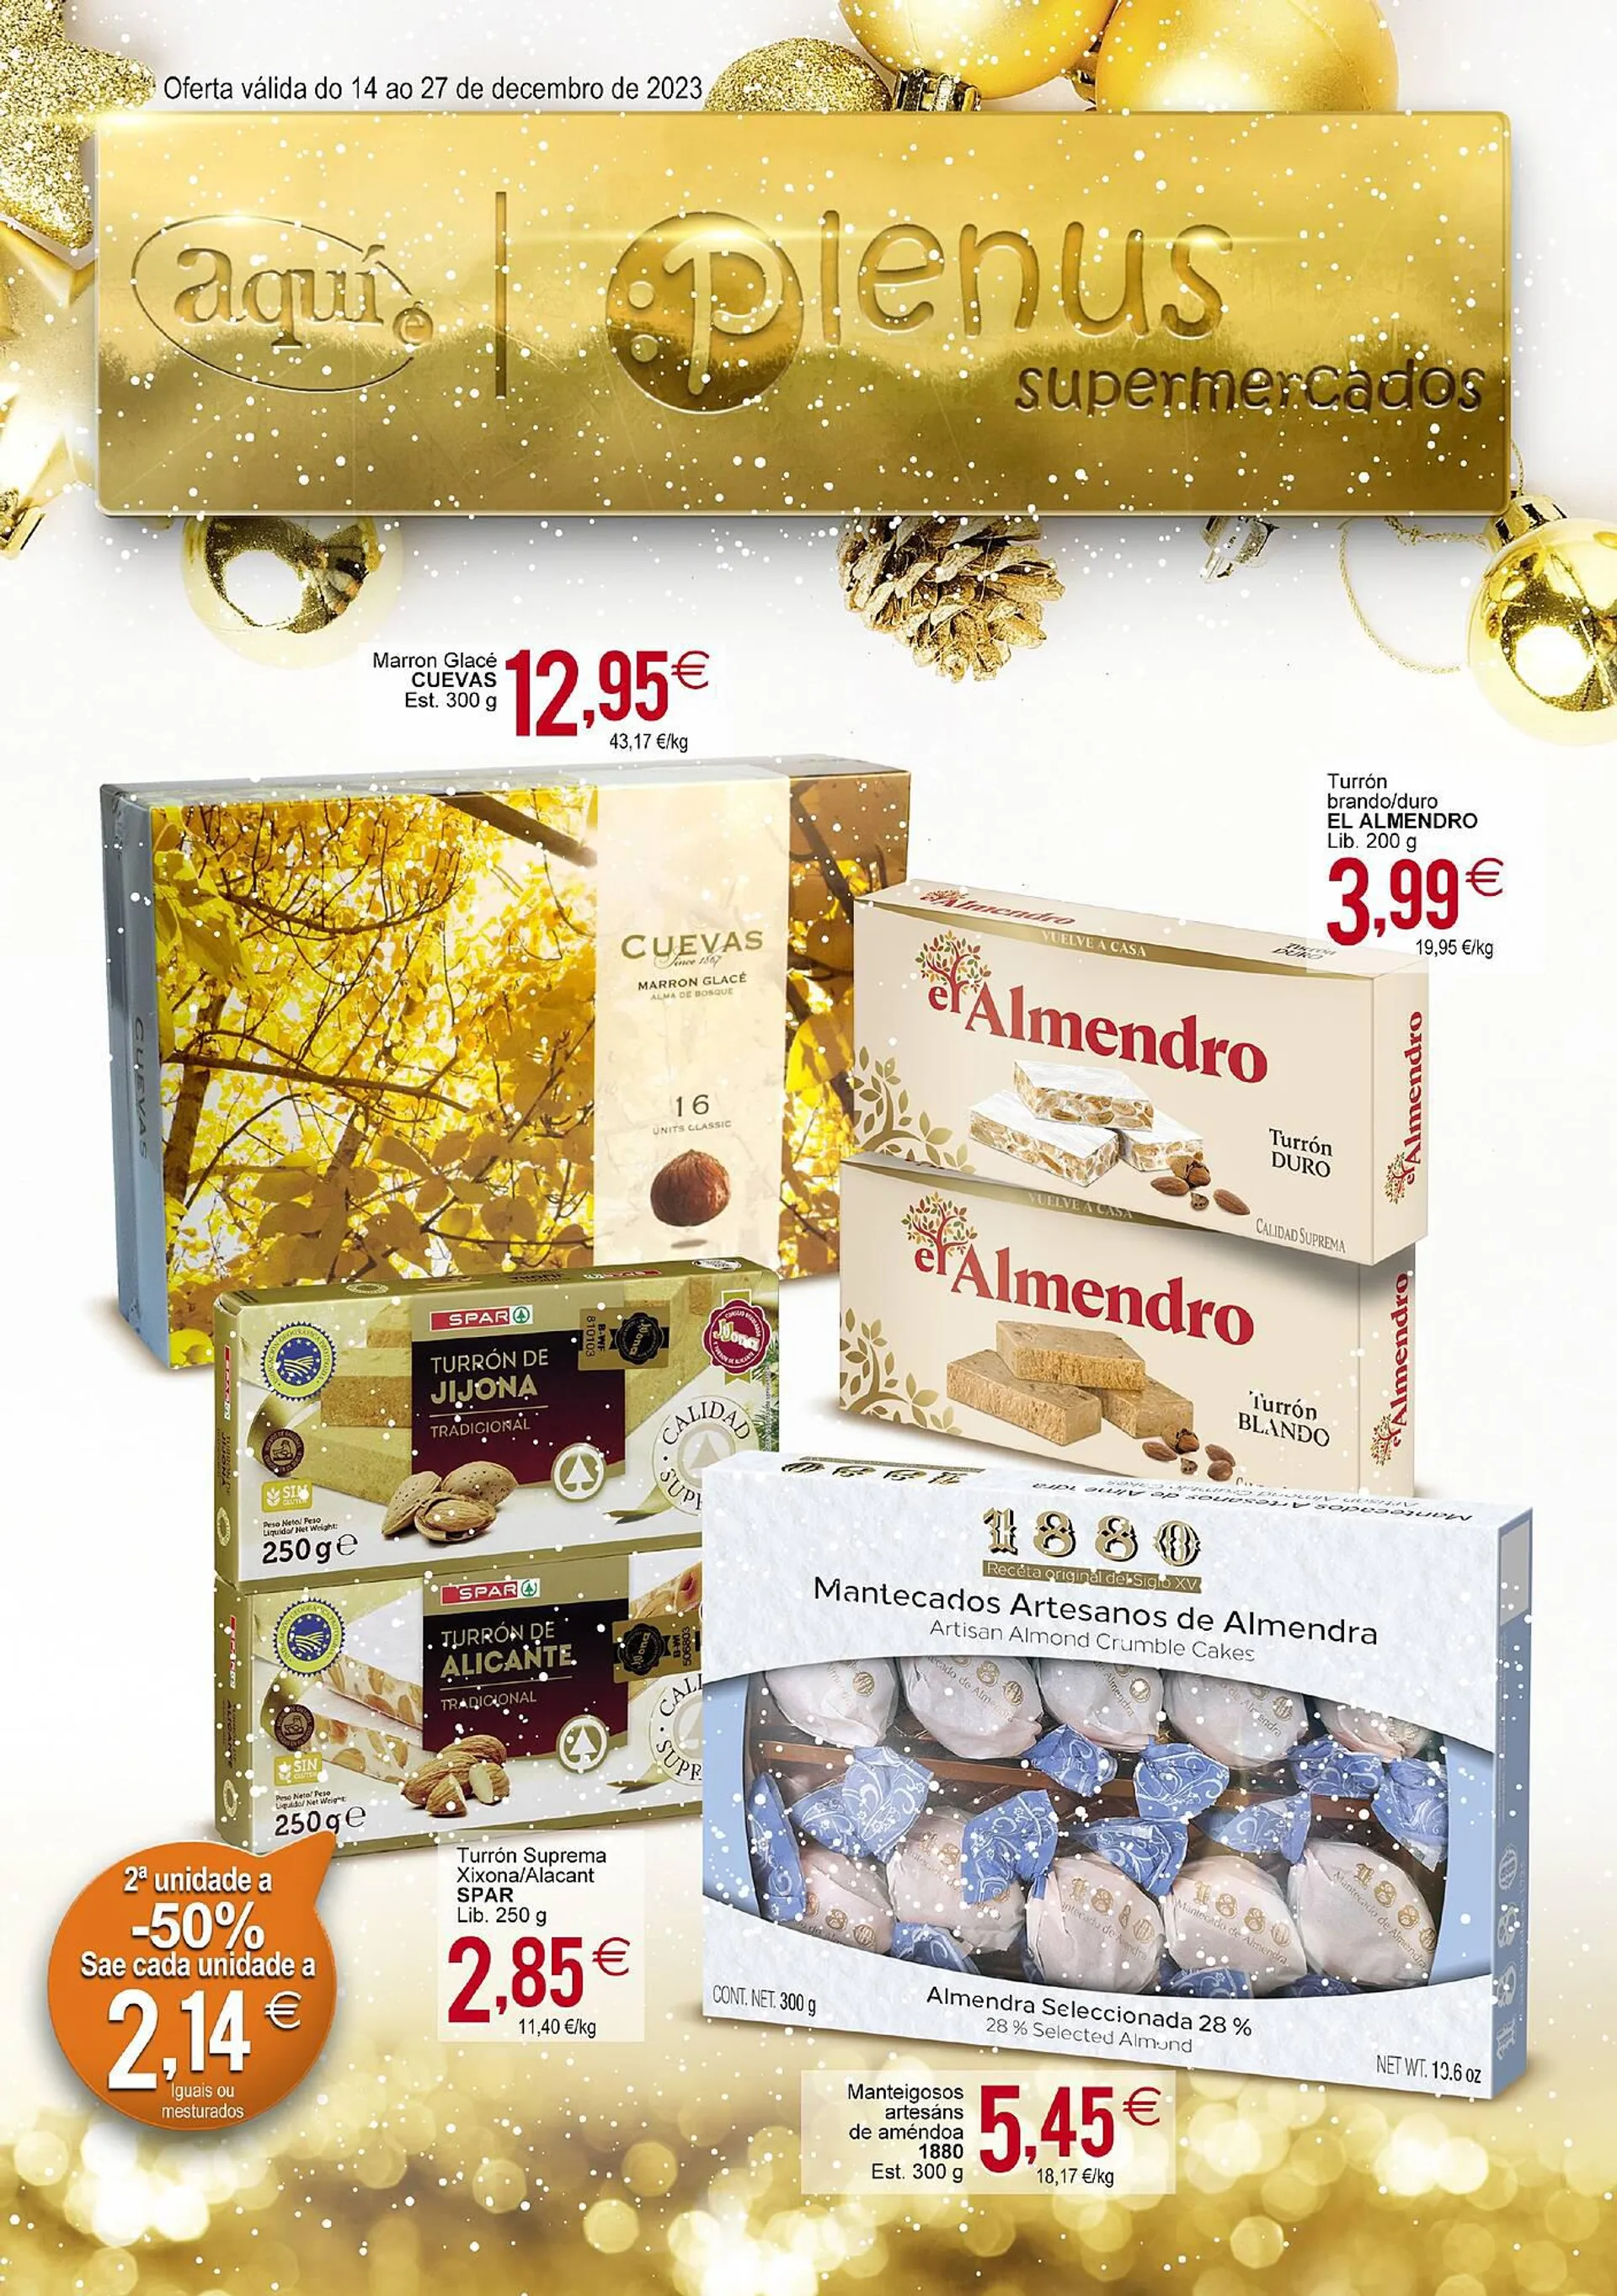 Catálogo de Folleto Plenus Supermercados 14 de diciembre al 27 de diciembre 2023 - Página 